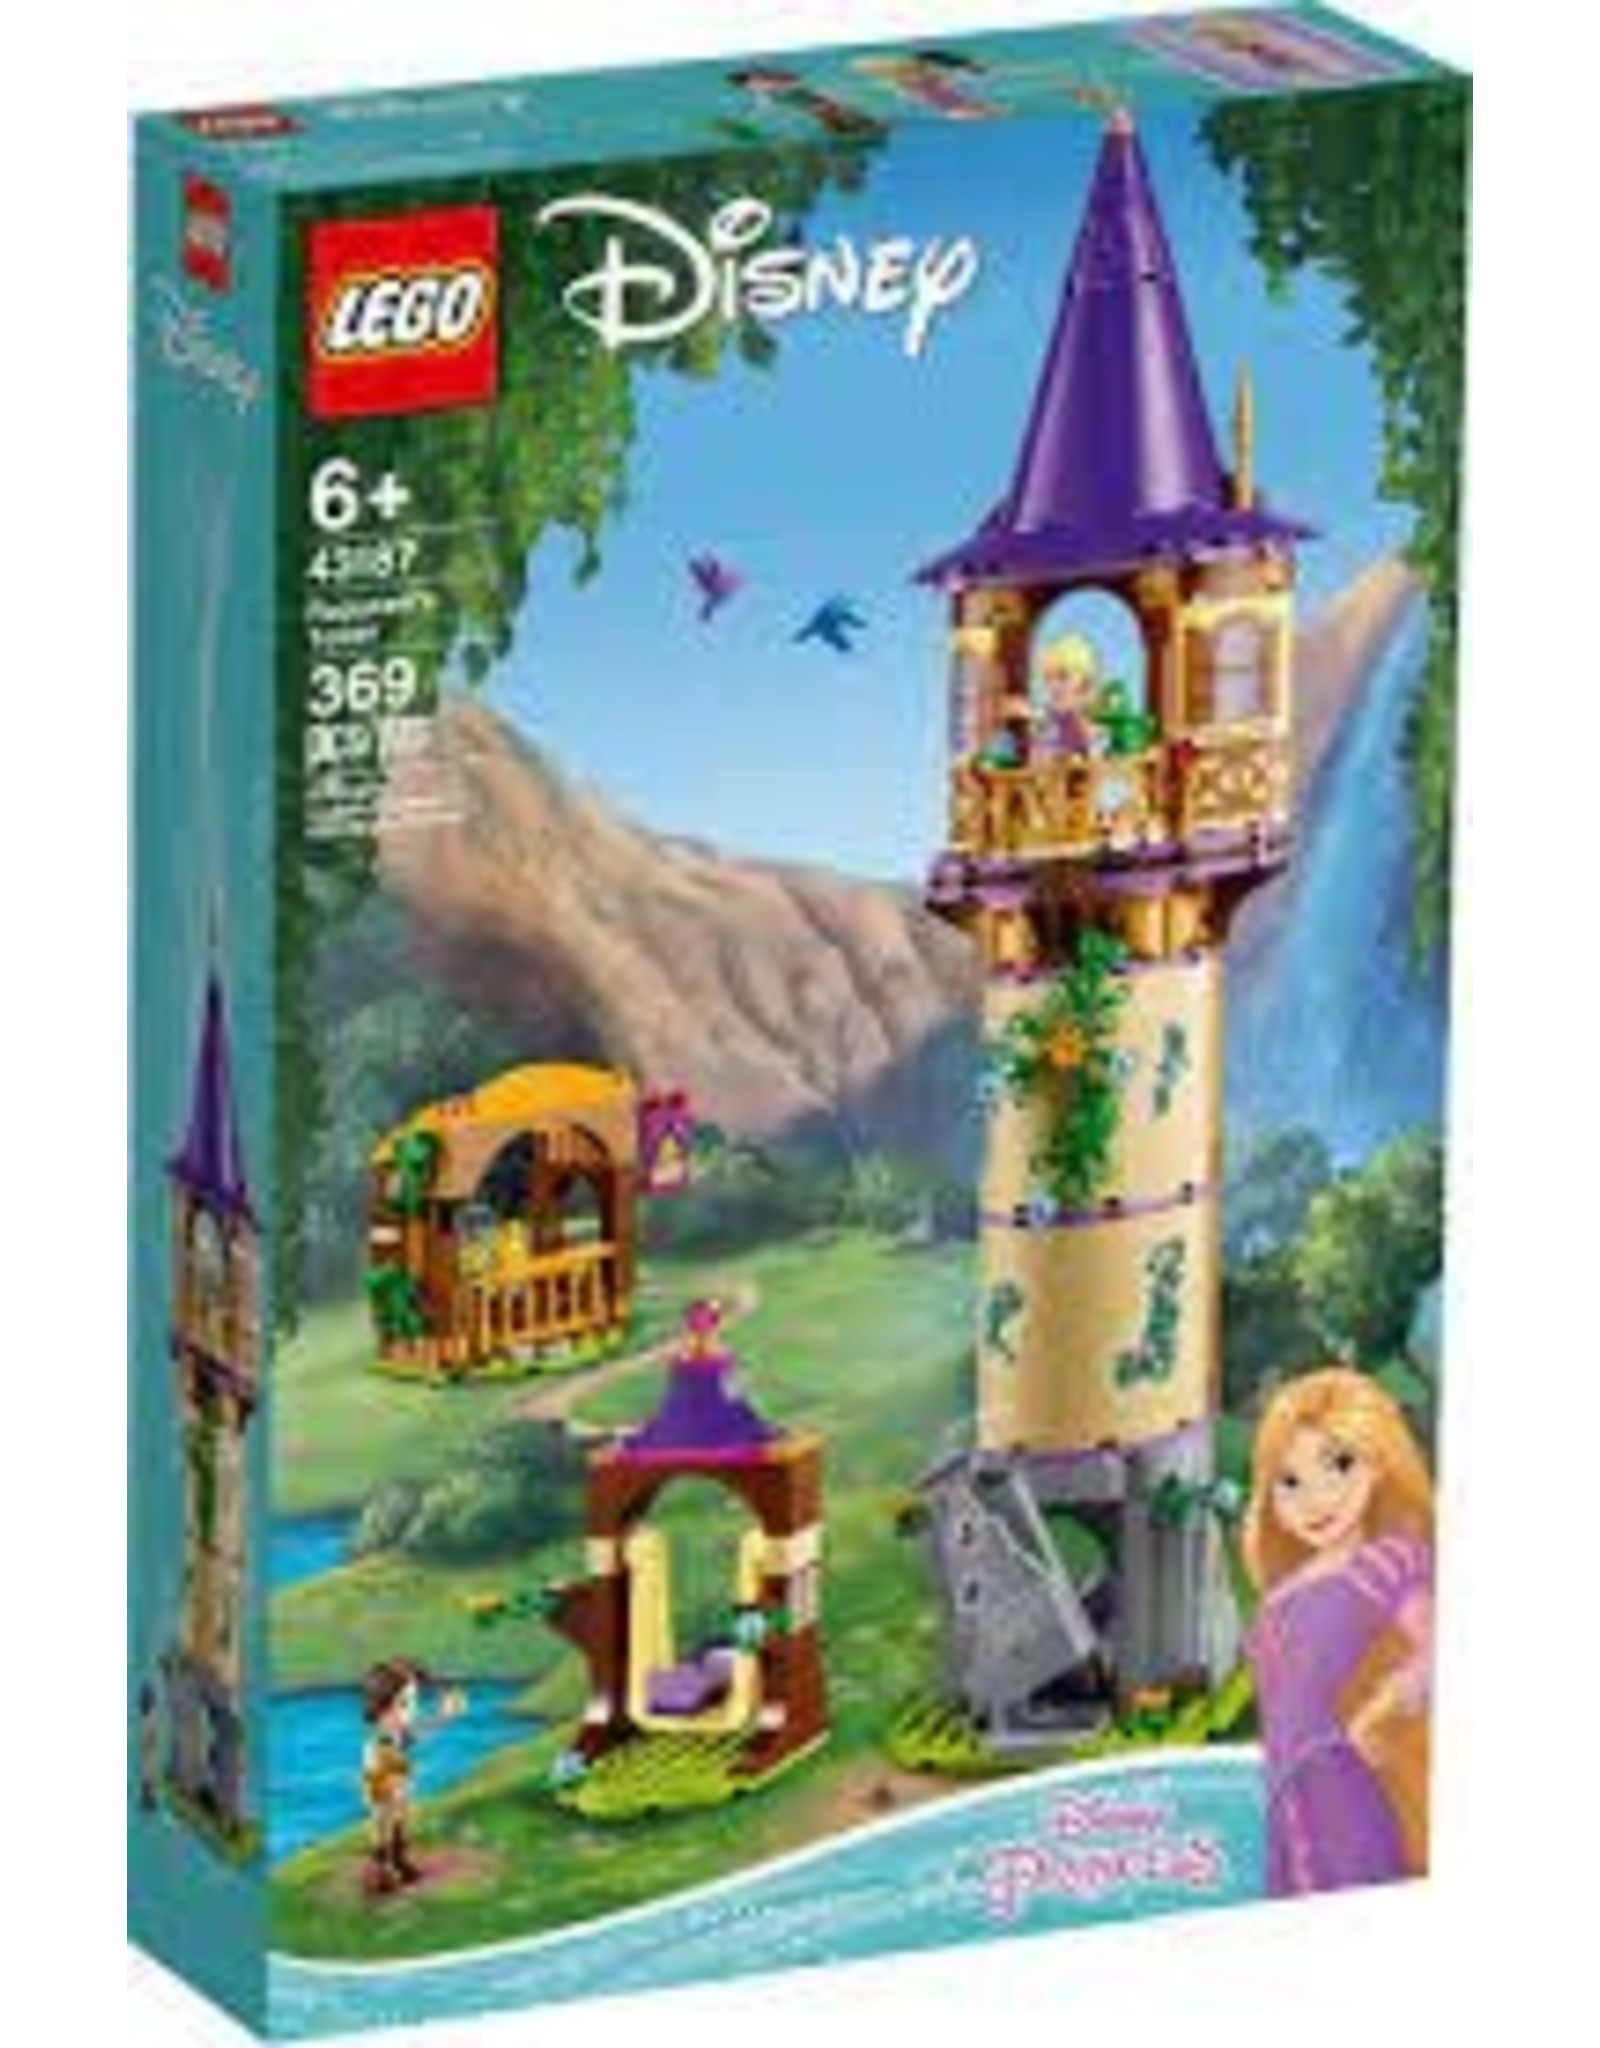 Lego Rapunzels Tower